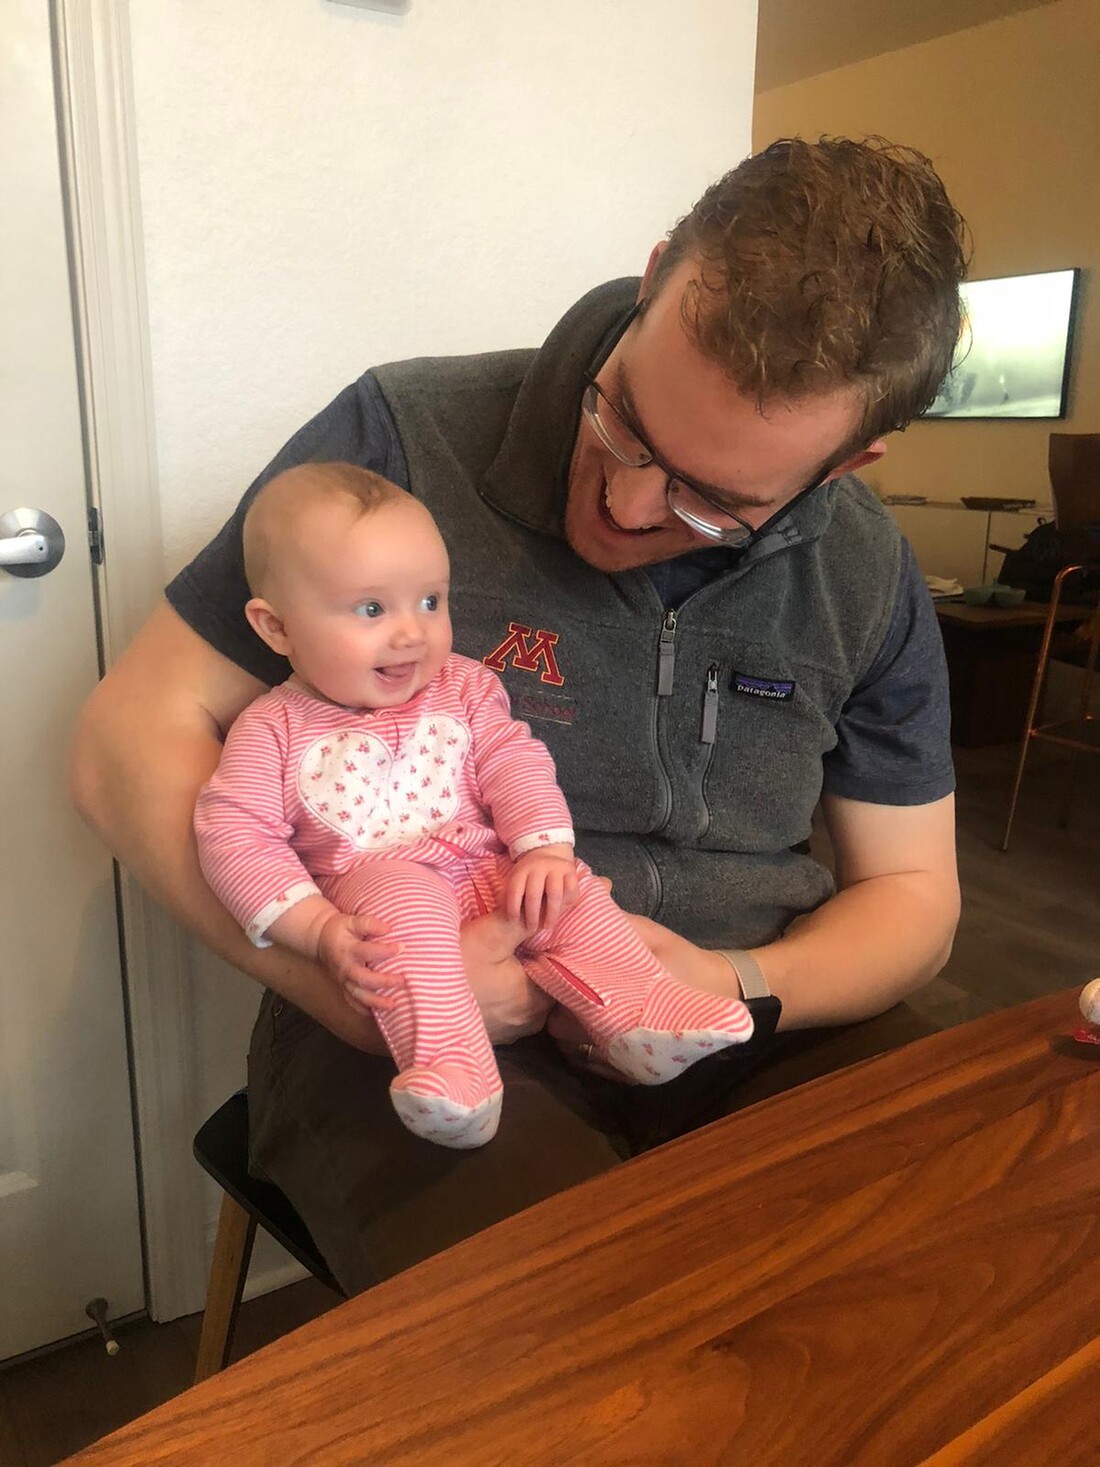 Tom Schmidt holding a baby